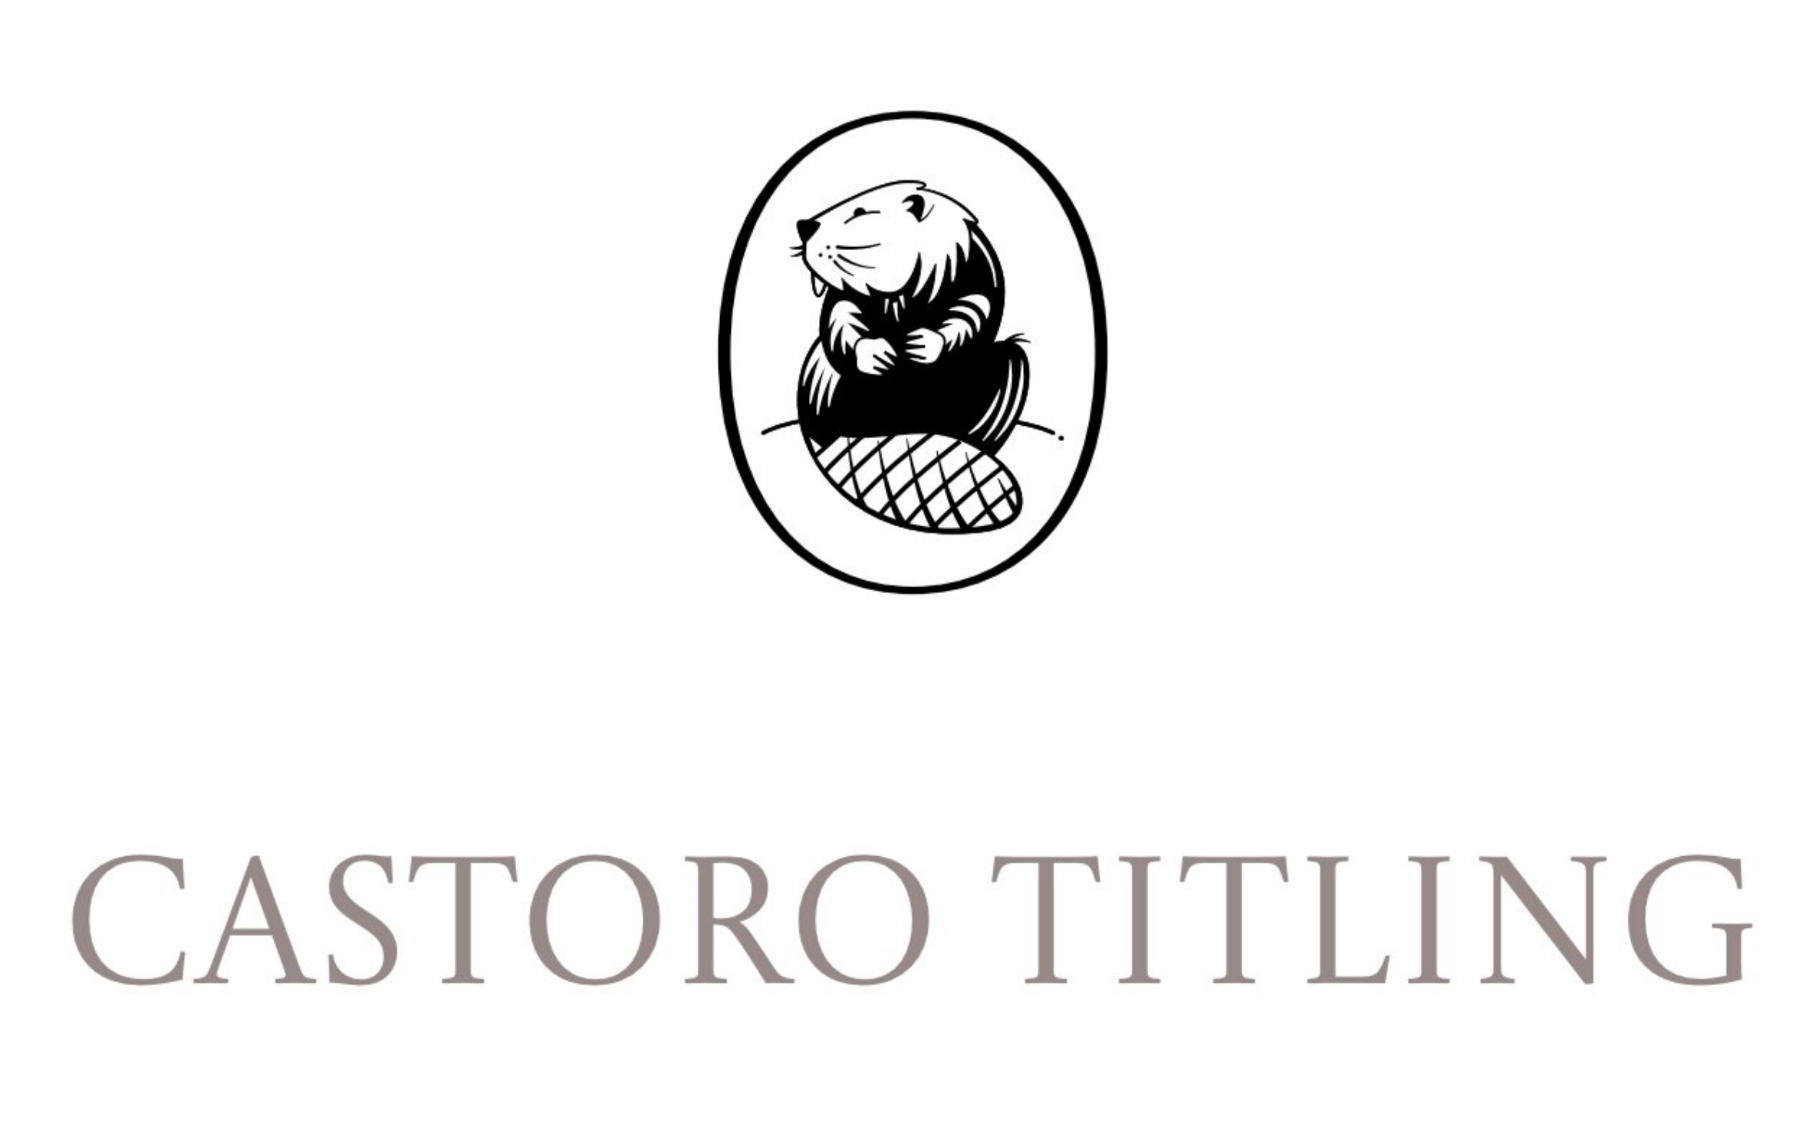 Castoro Titling